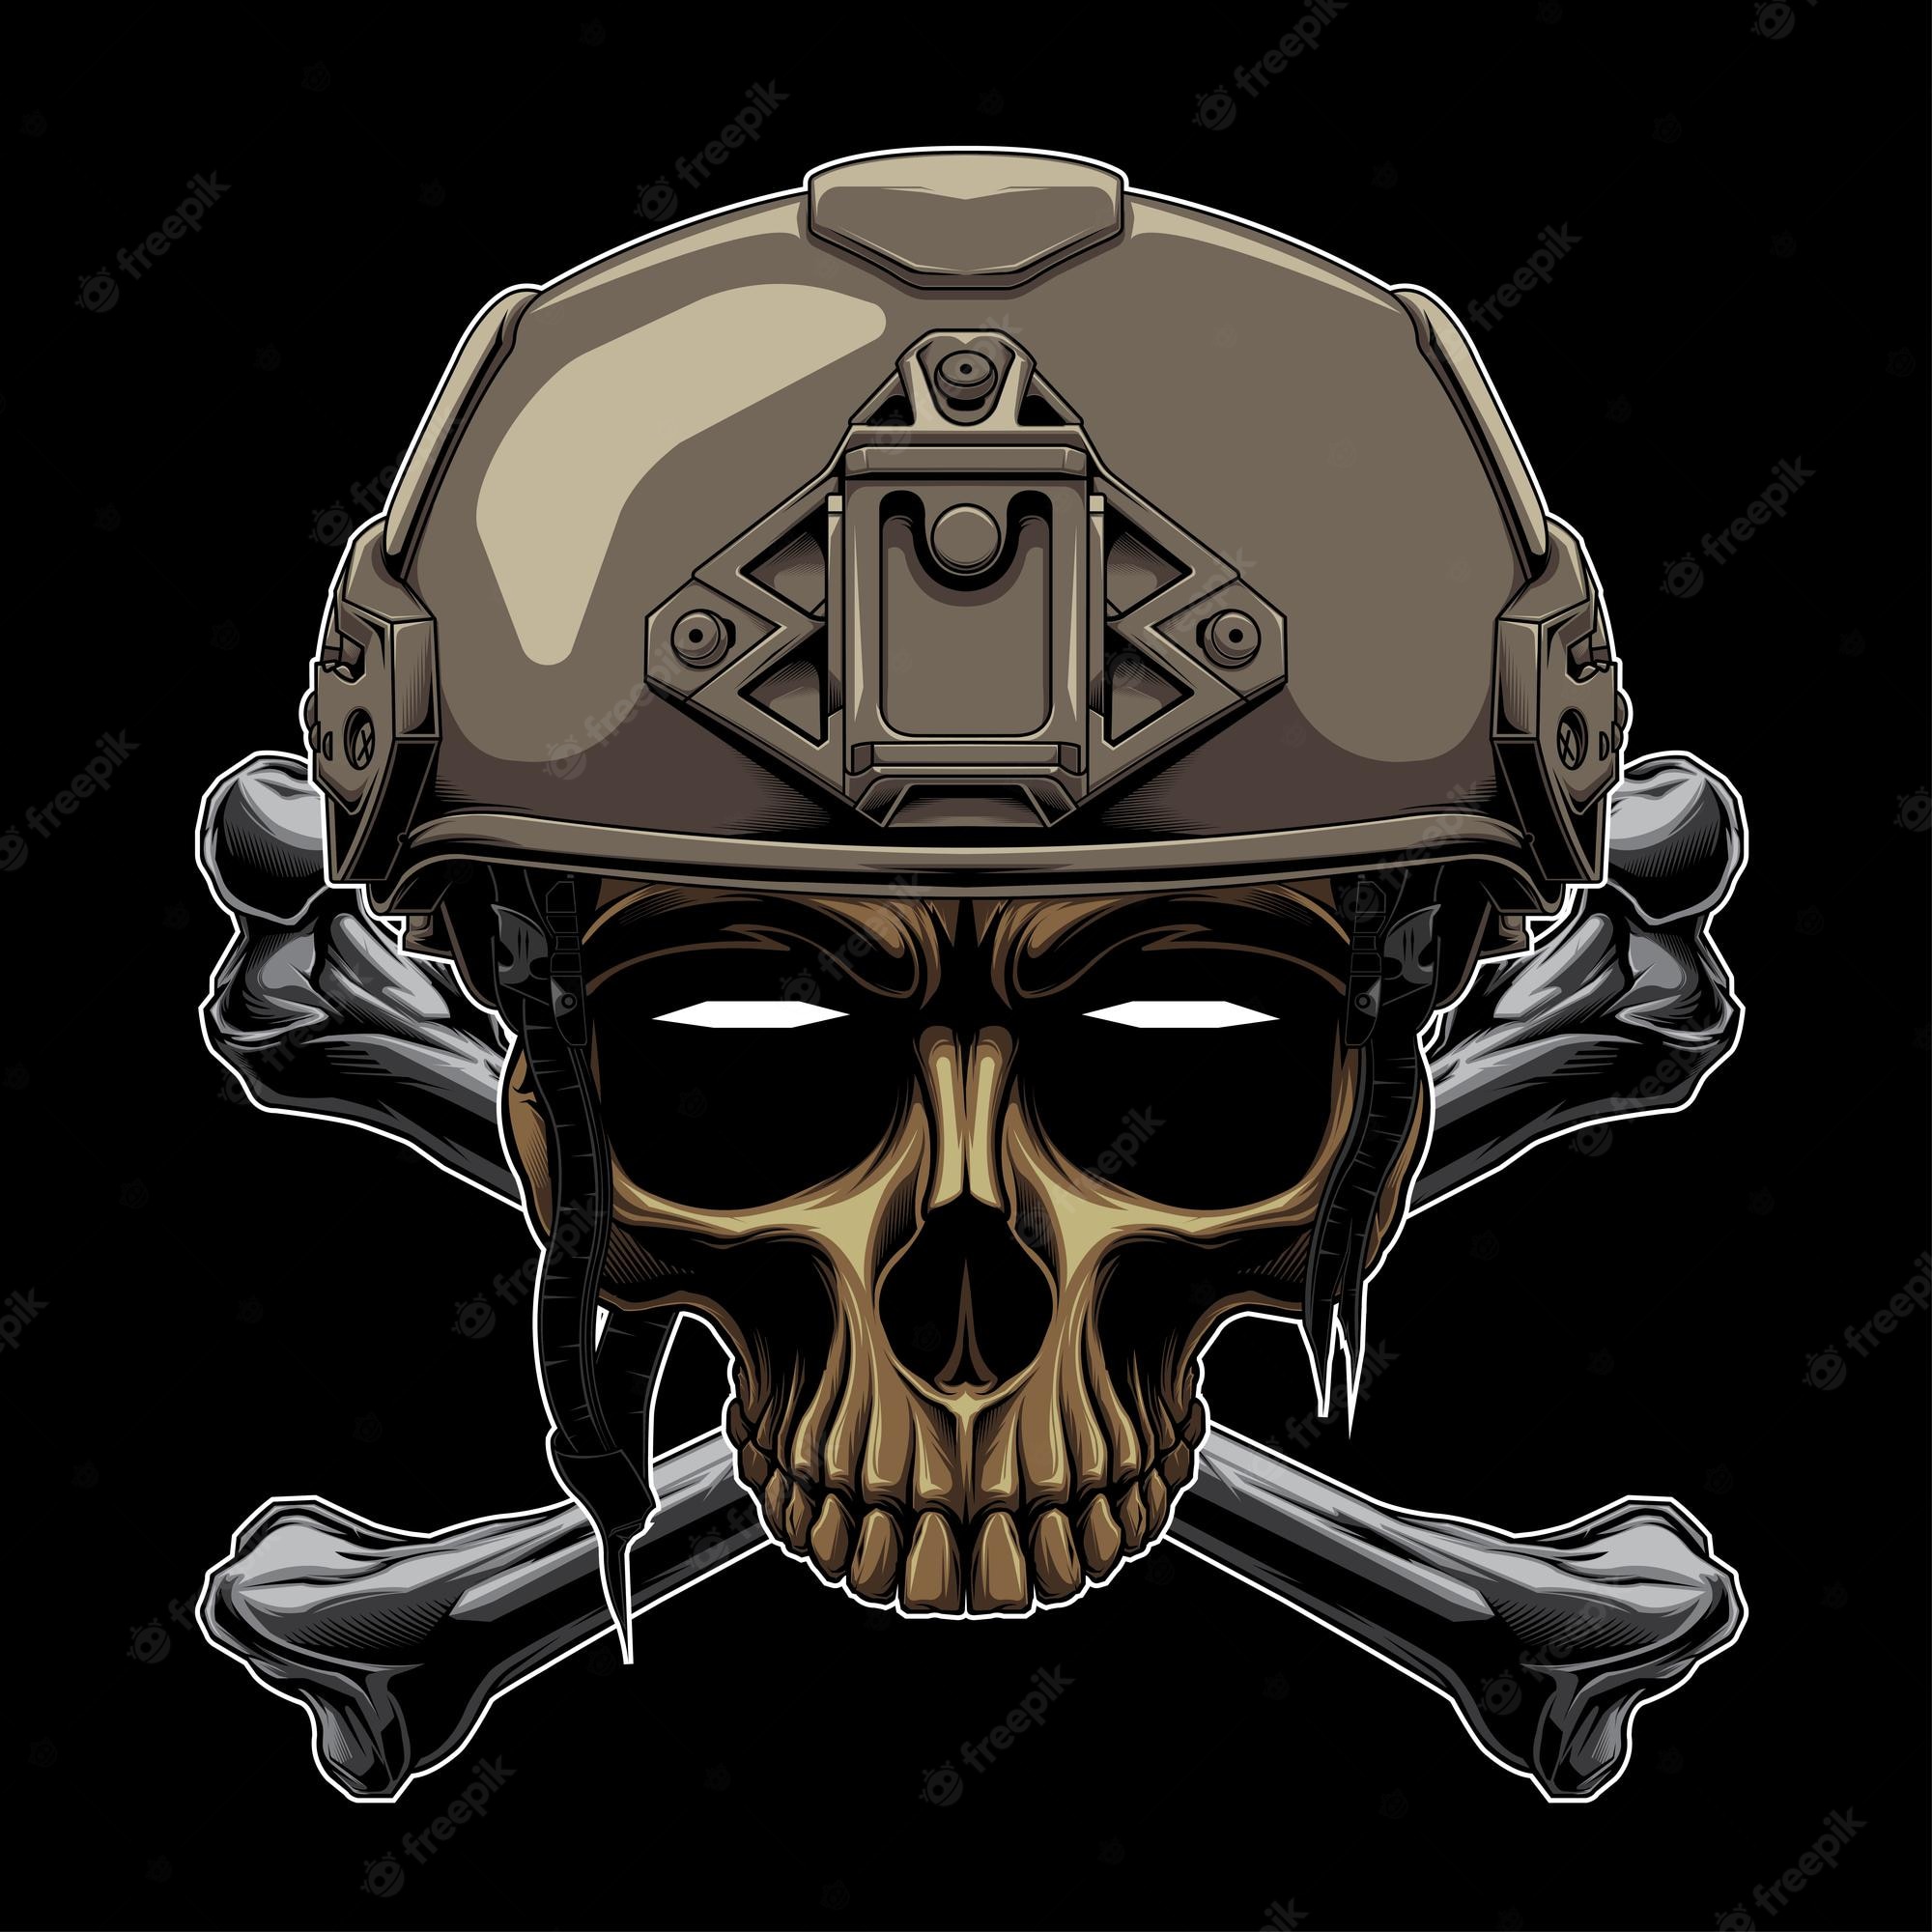 Skeleton army Image. Free Vectors, & PSD